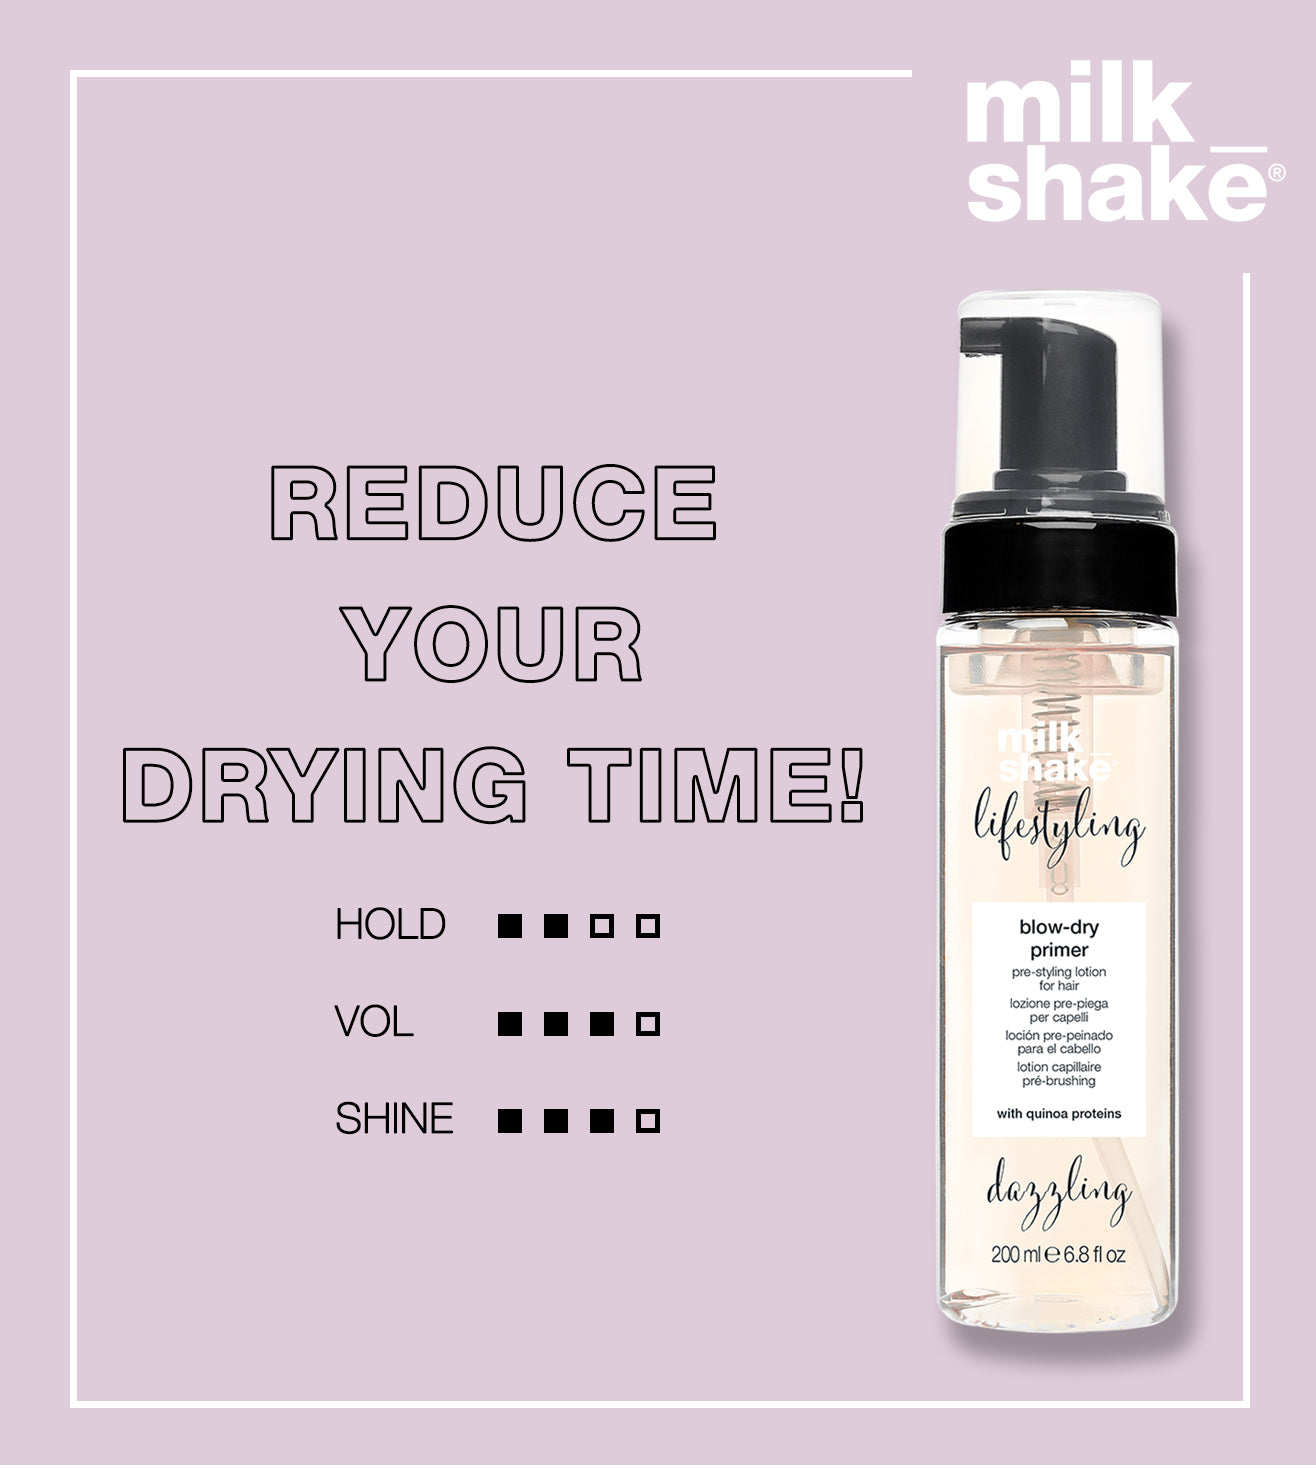 milk_shake lifestyling blow-dry primer